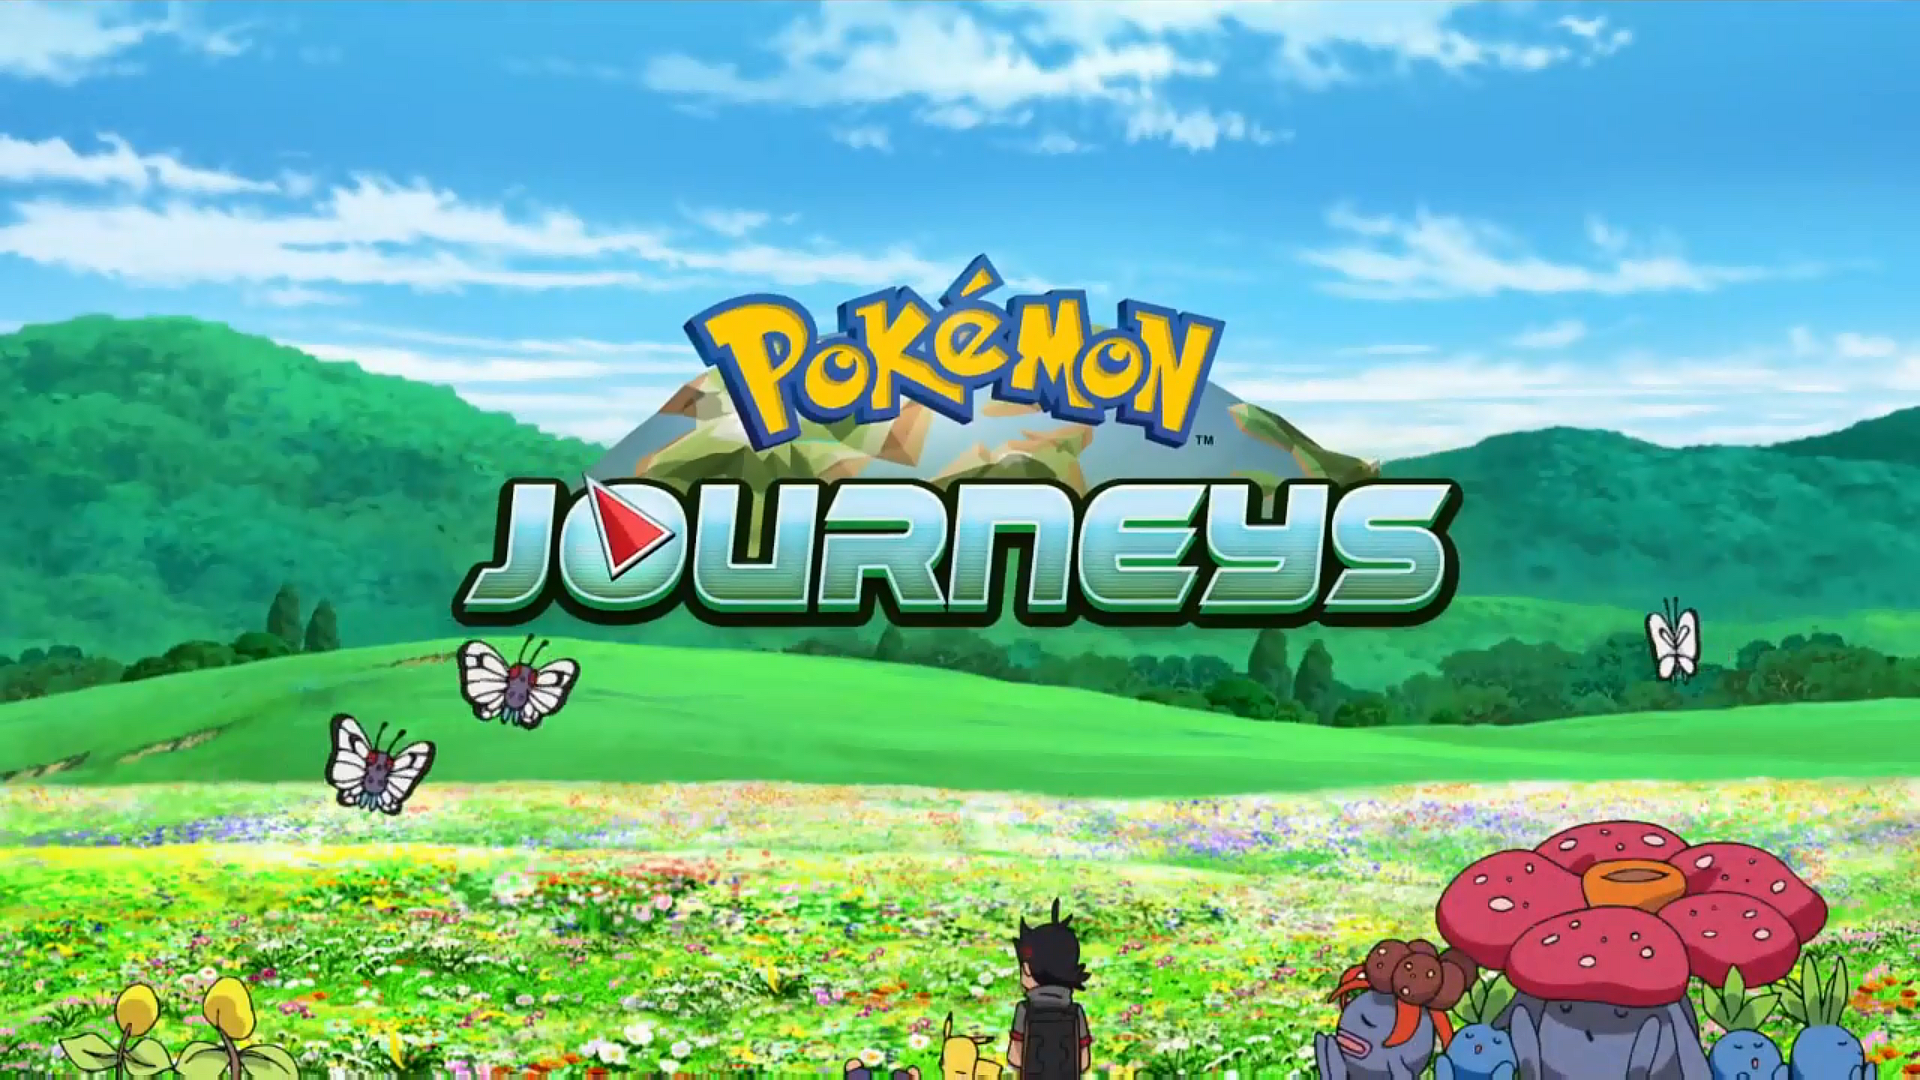 Assistir Pokémon Master Journeys: The Series - online